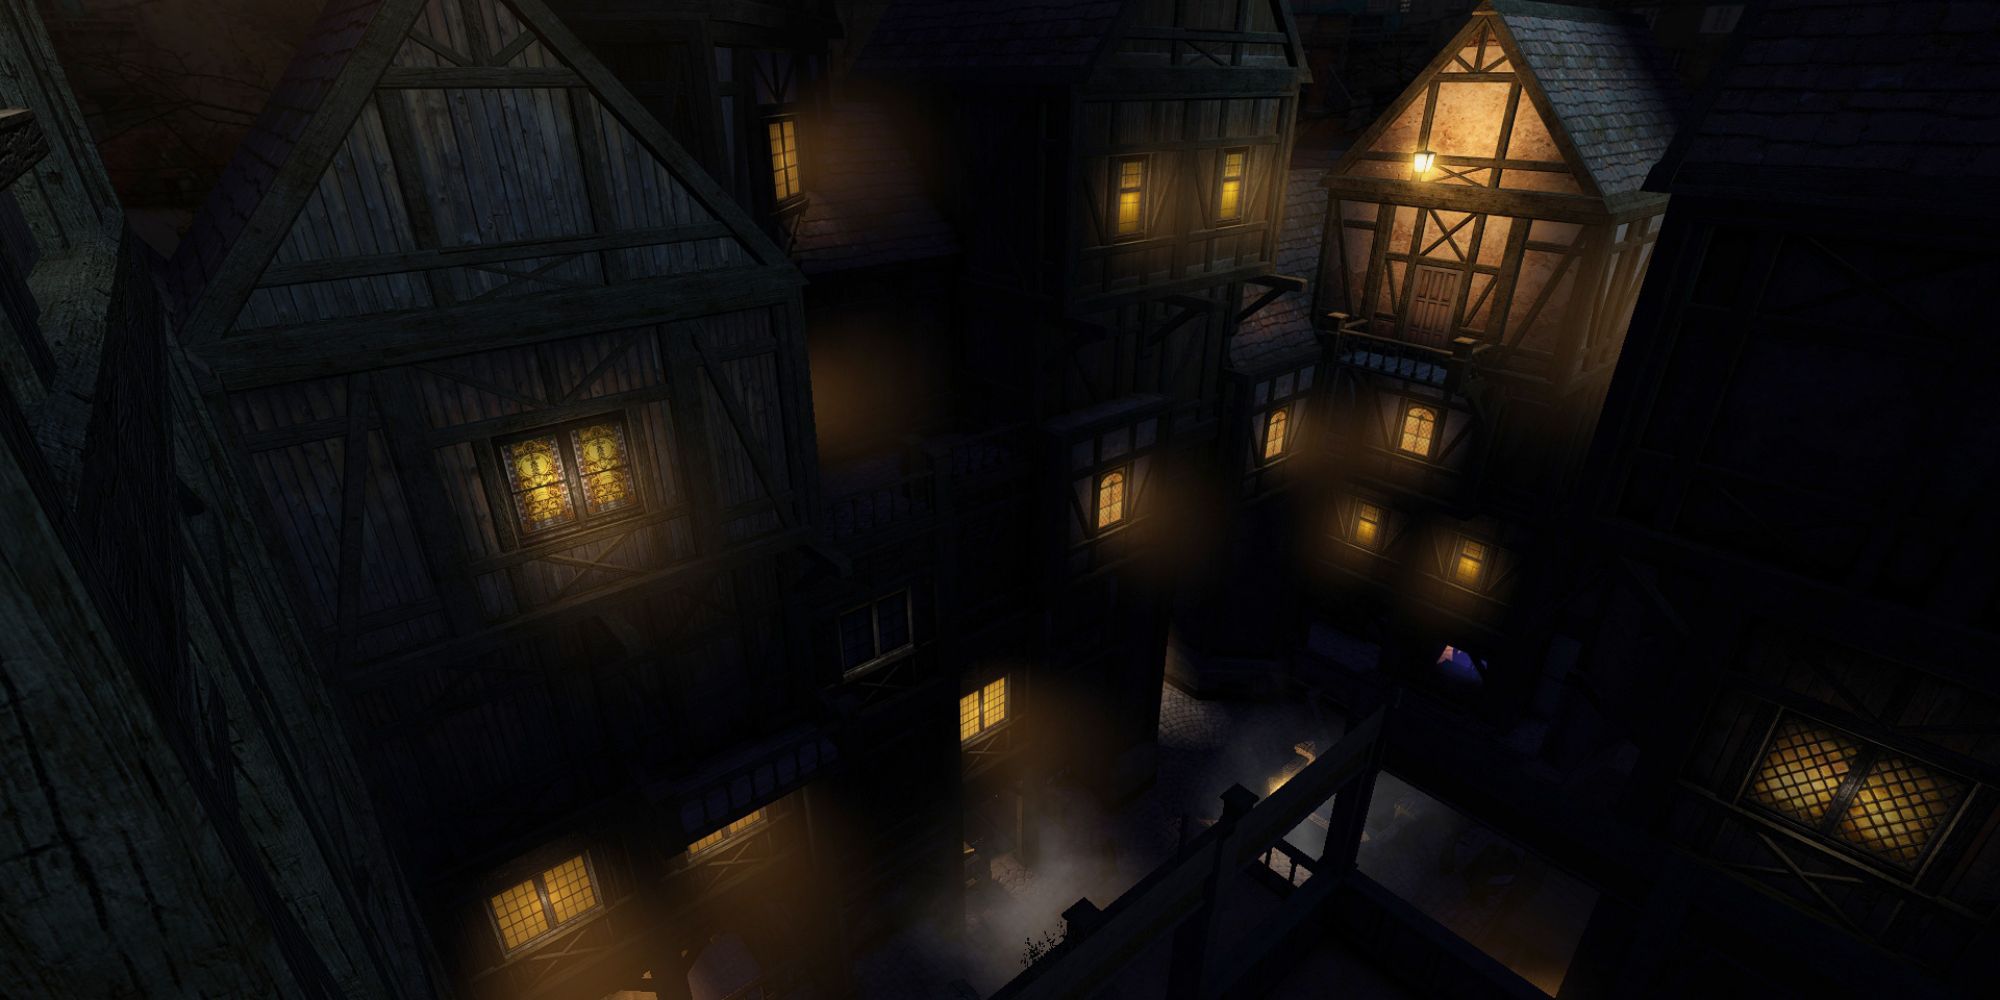 The Dark Mod village at night, lit by windows and lanterns